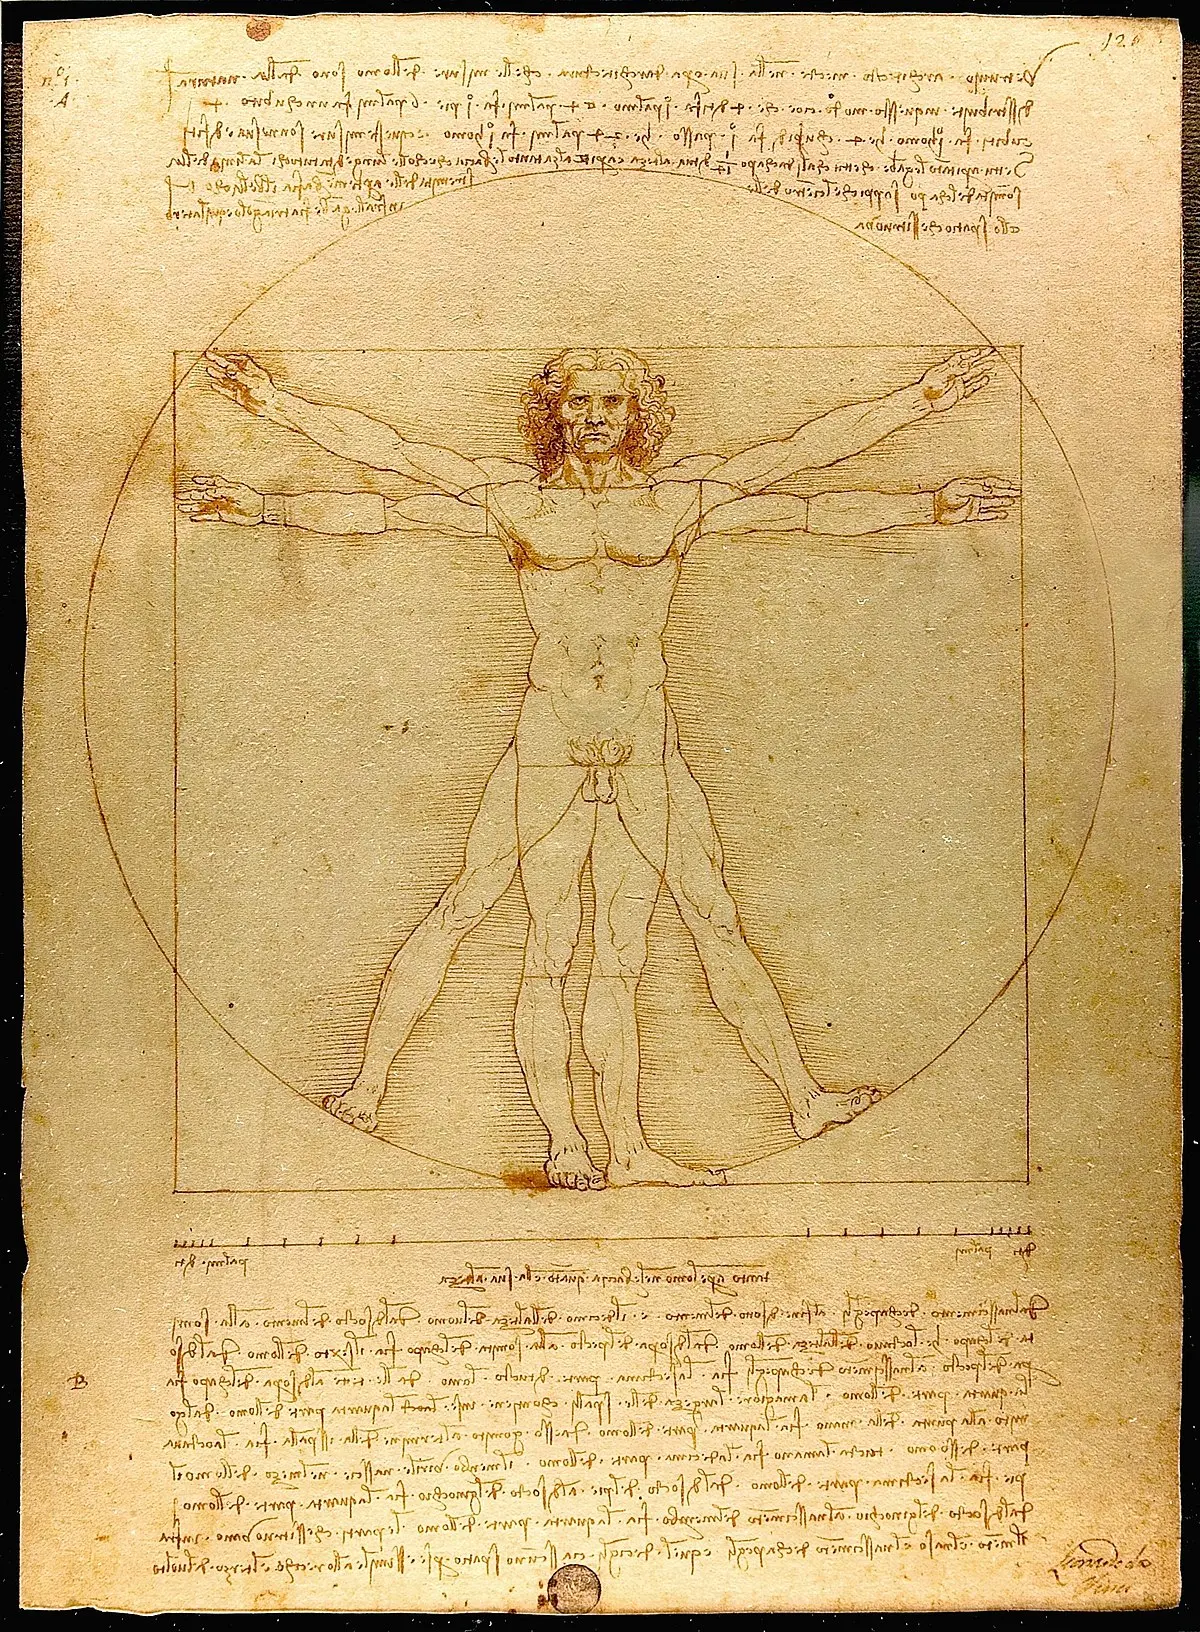 da vinci psicologia - Cuáles son las aportaciones de Leonardo da Vinci